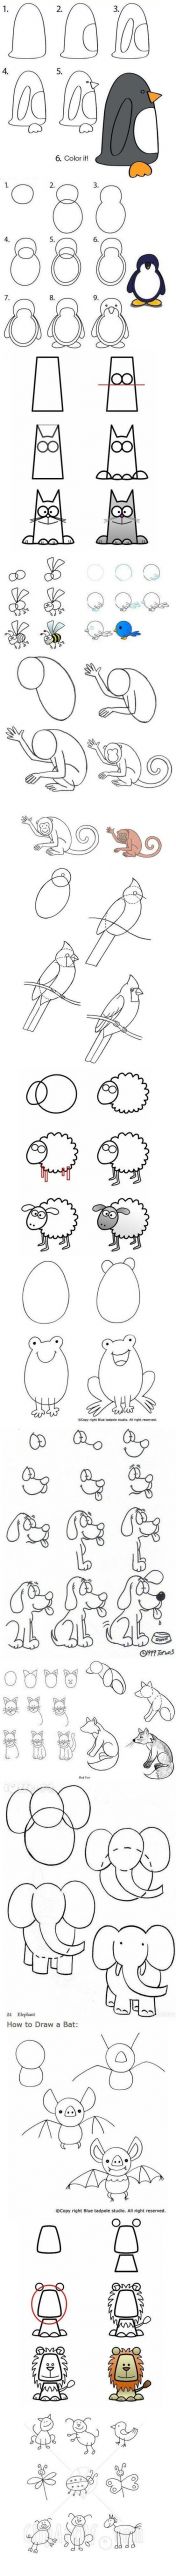 Farm Animals Drawing Character Design